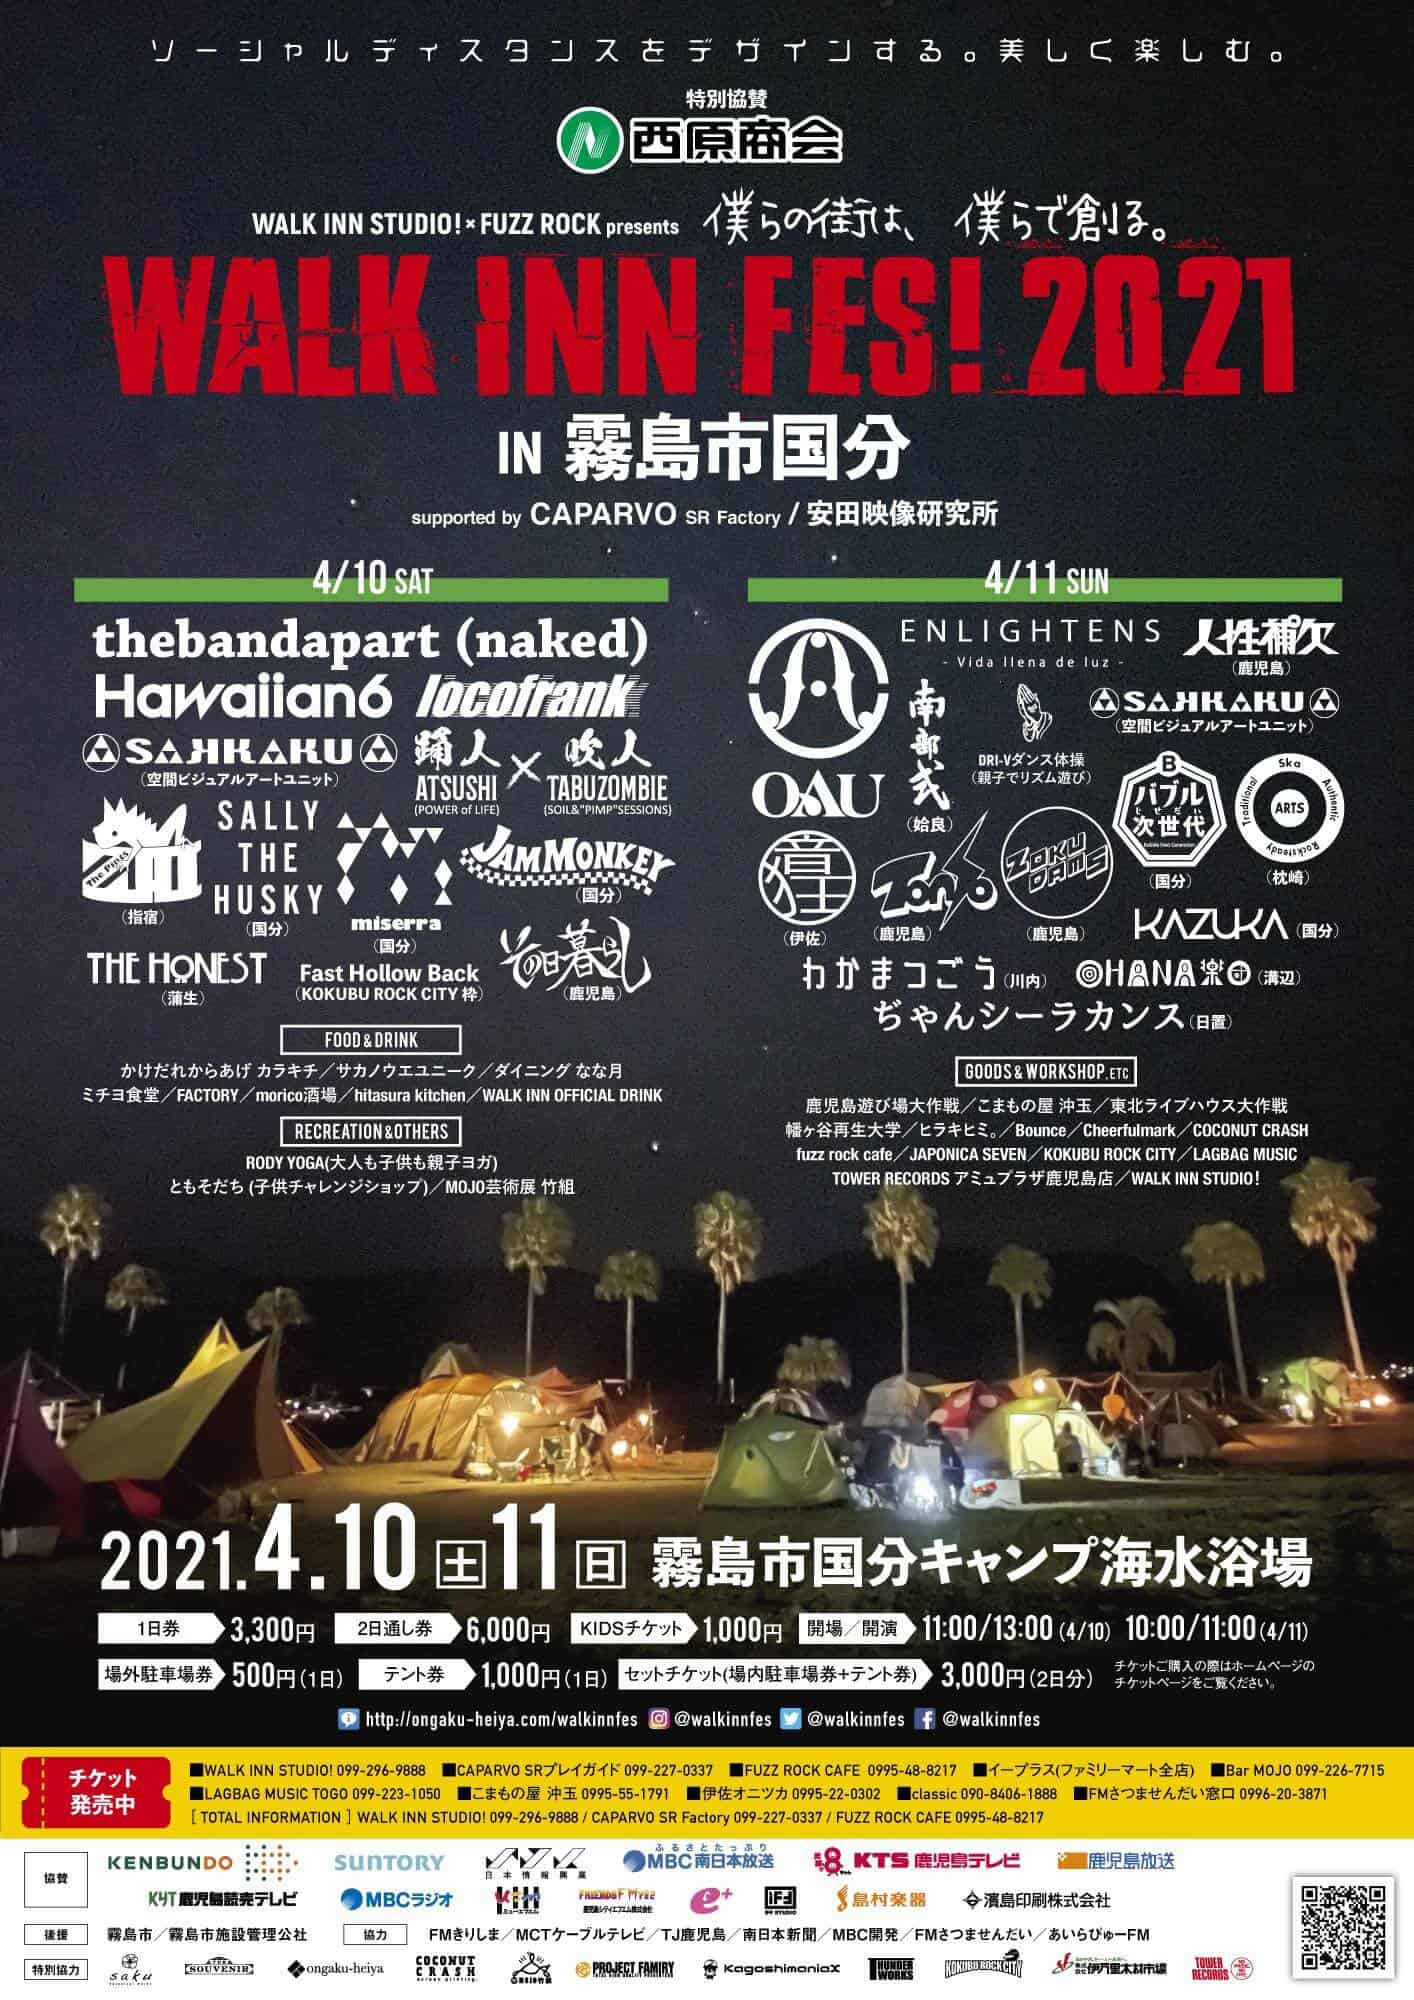 WALK INN FES！２０２１アーティスト発表！チケットはお早めに！